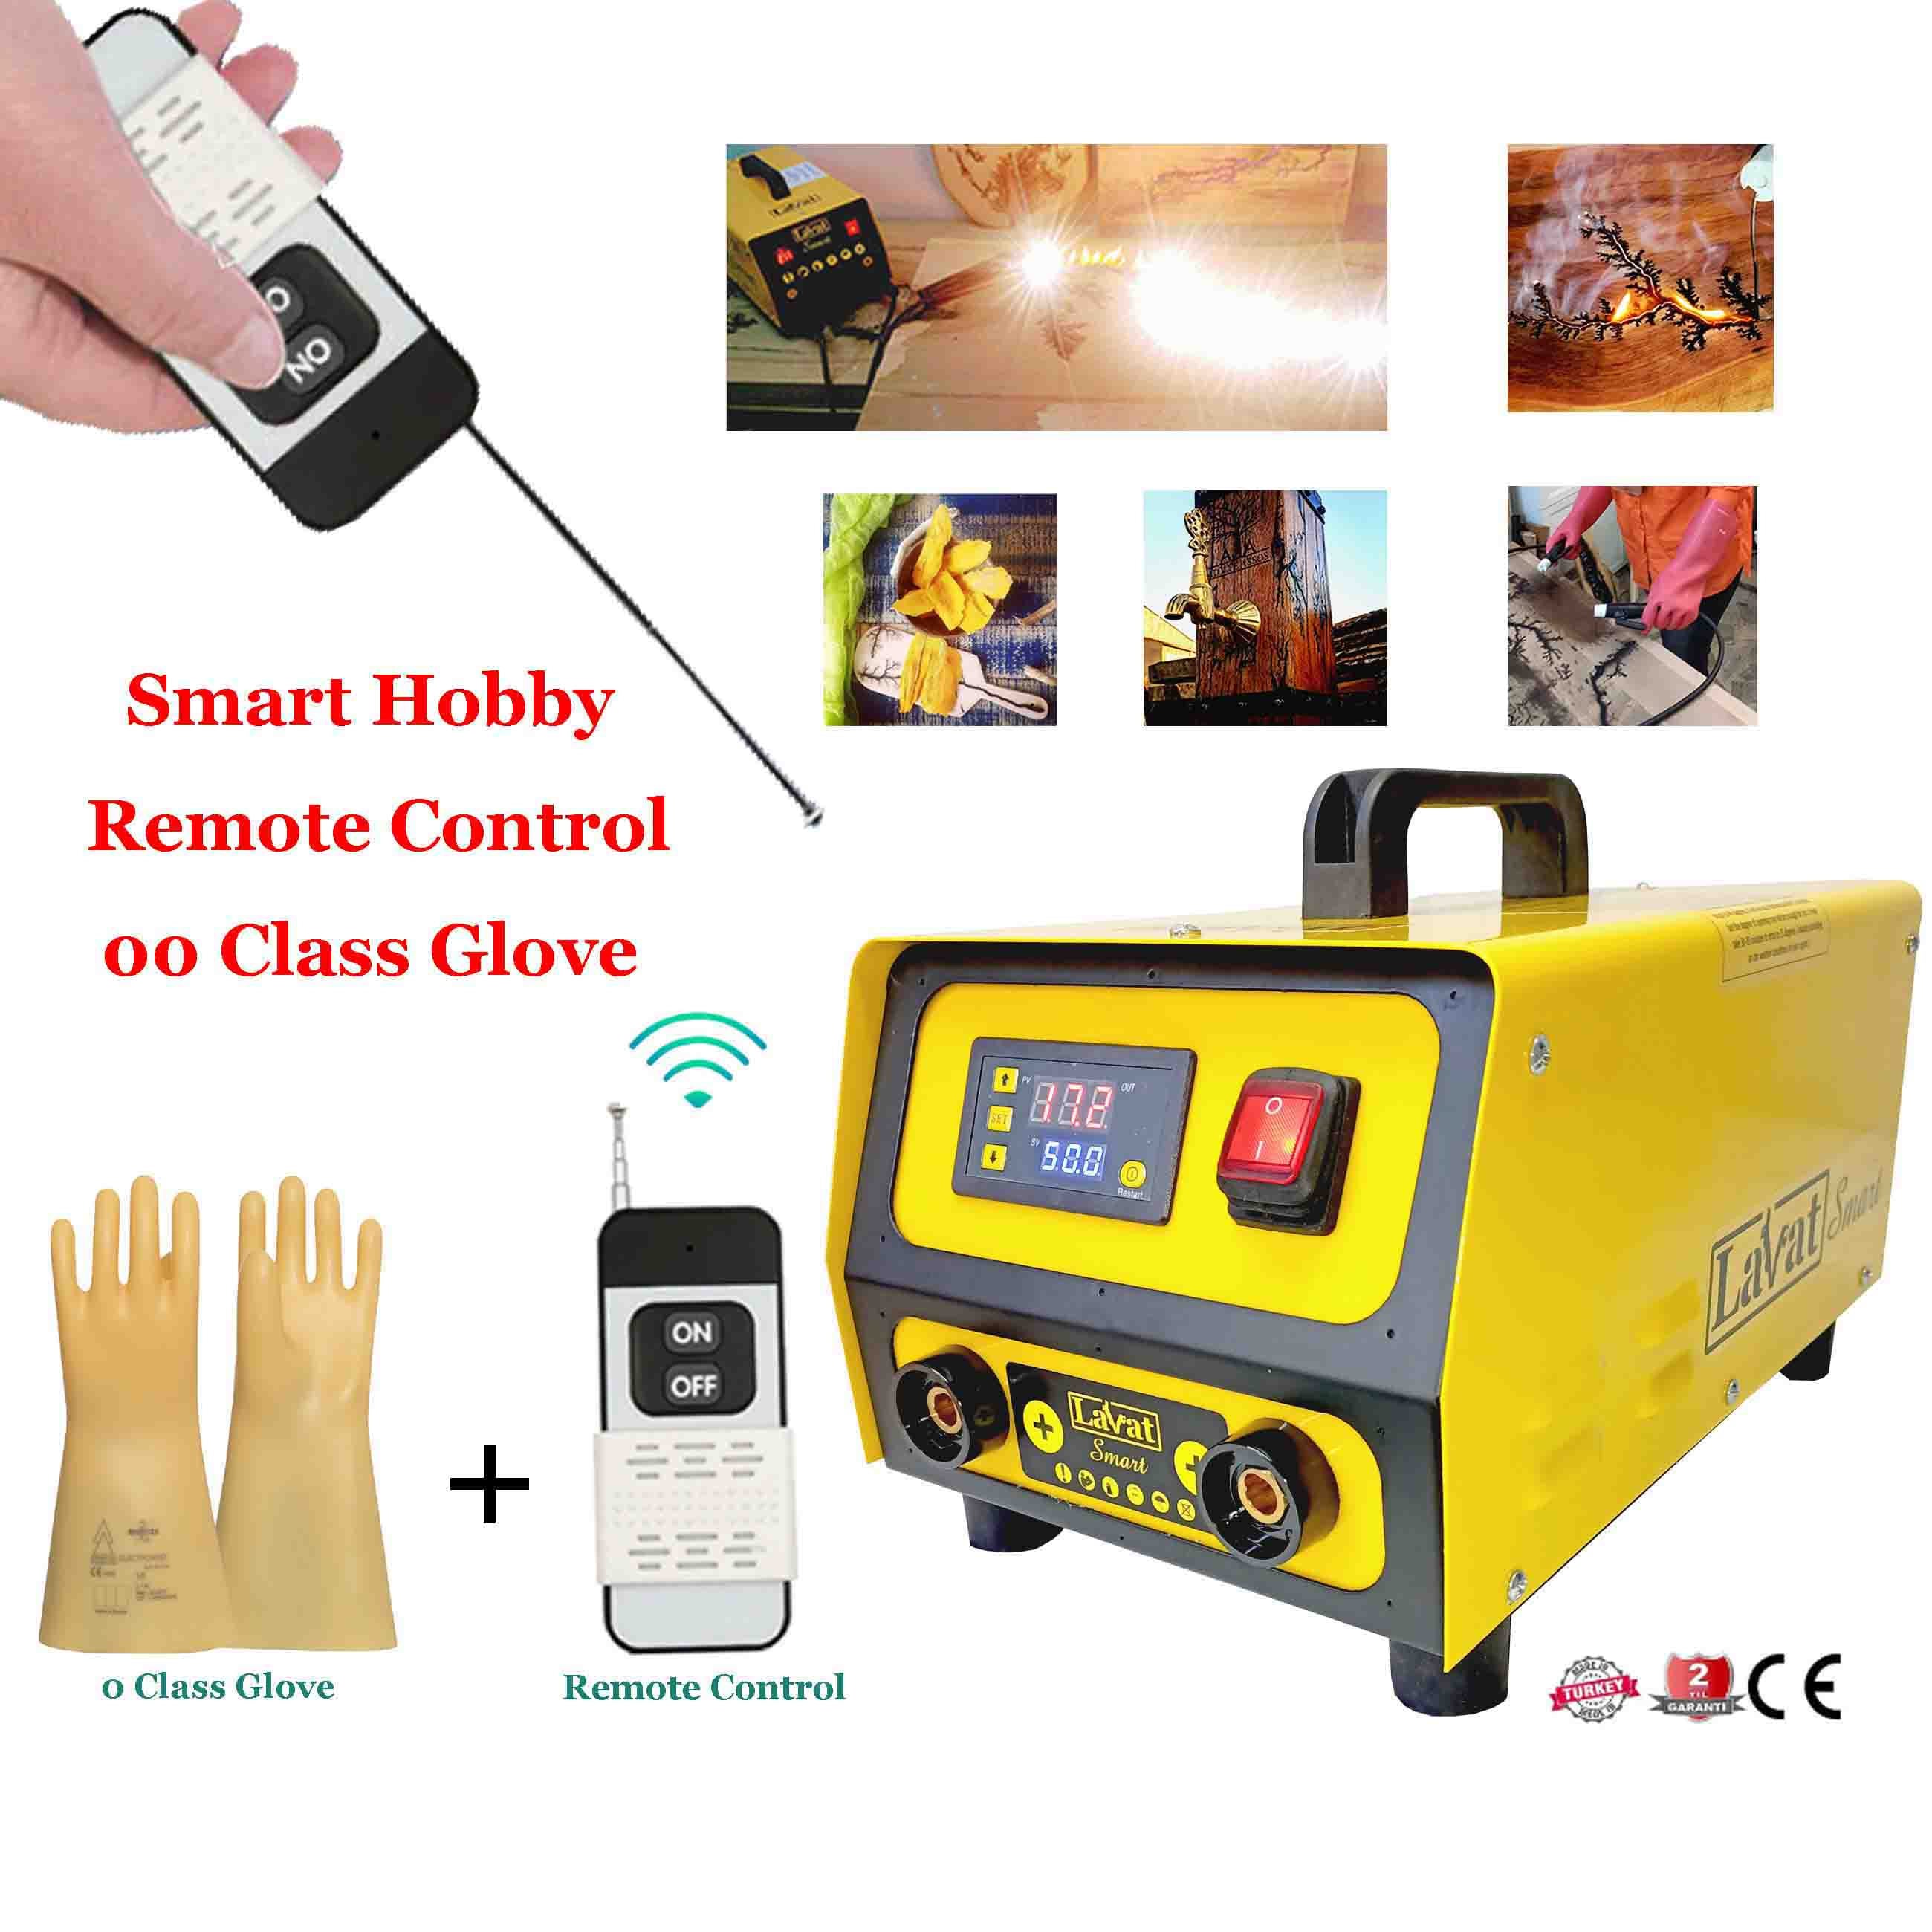 Lichtenberg Wood Burning Machine, Smart Hobby, 00 Class Glove, Remote  Controlled